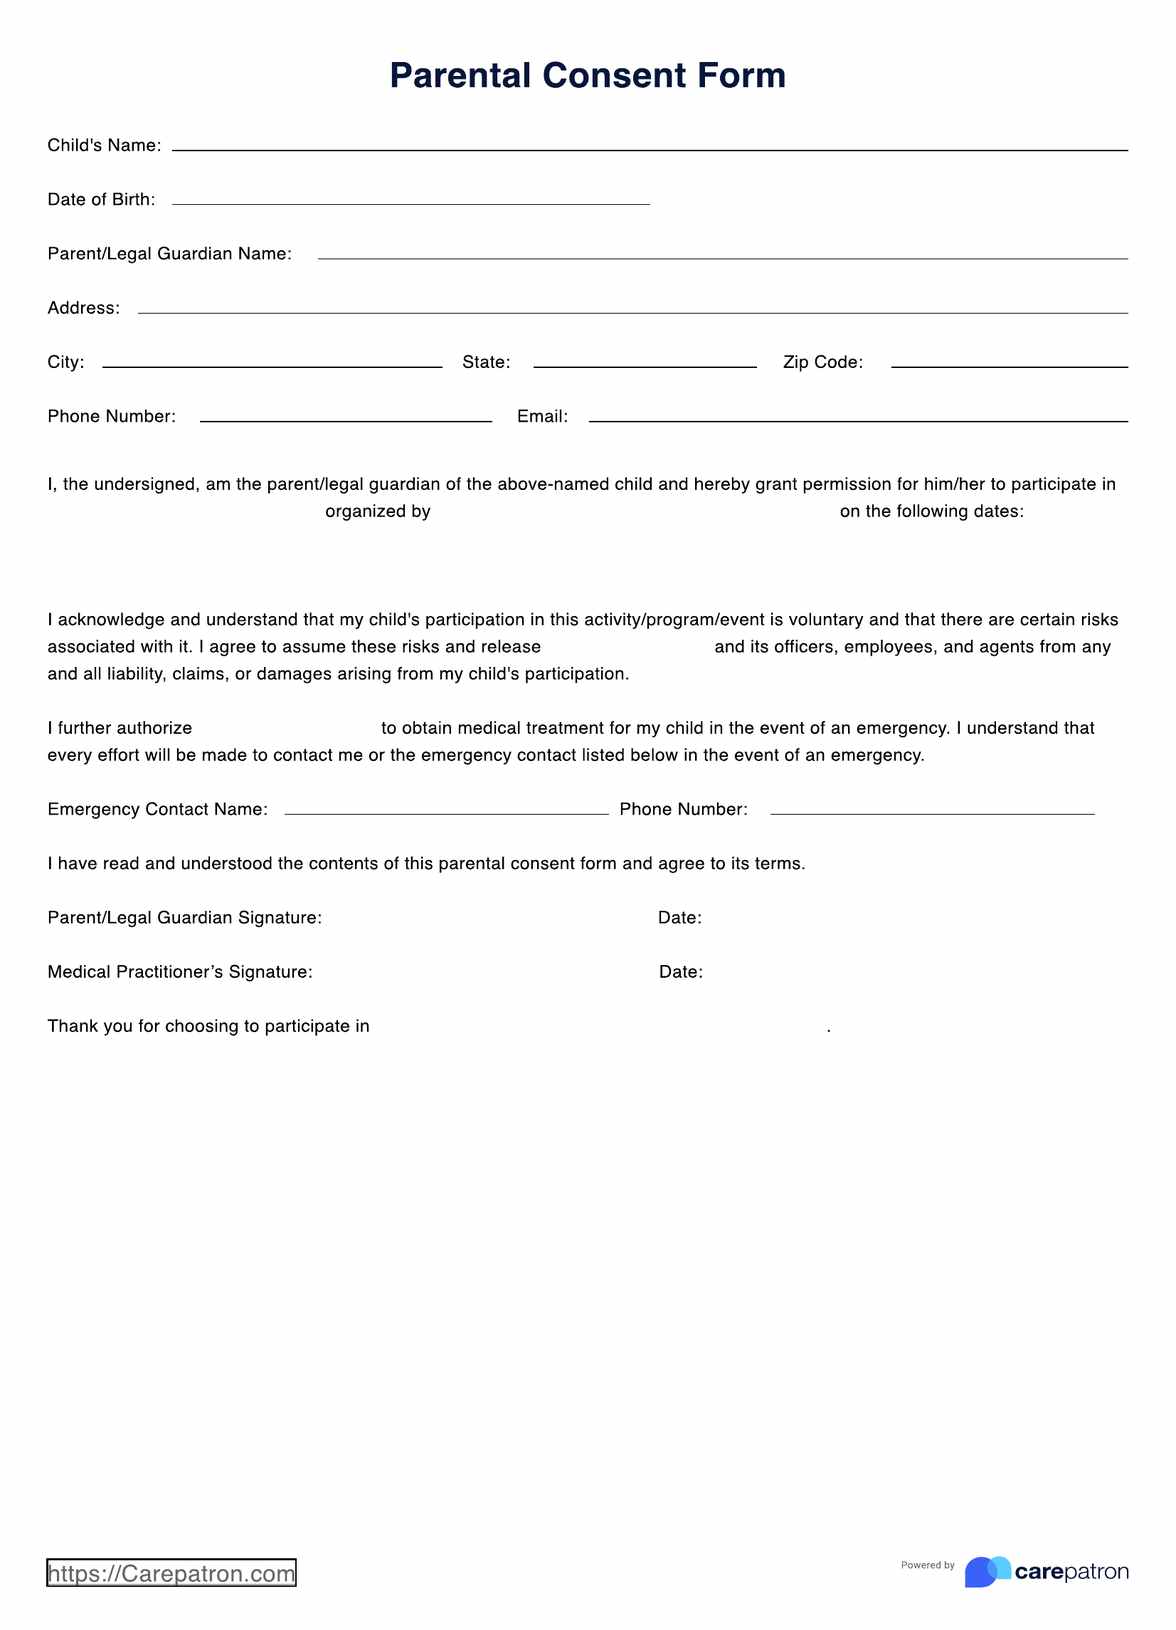 Parental Consent Form PDF Example